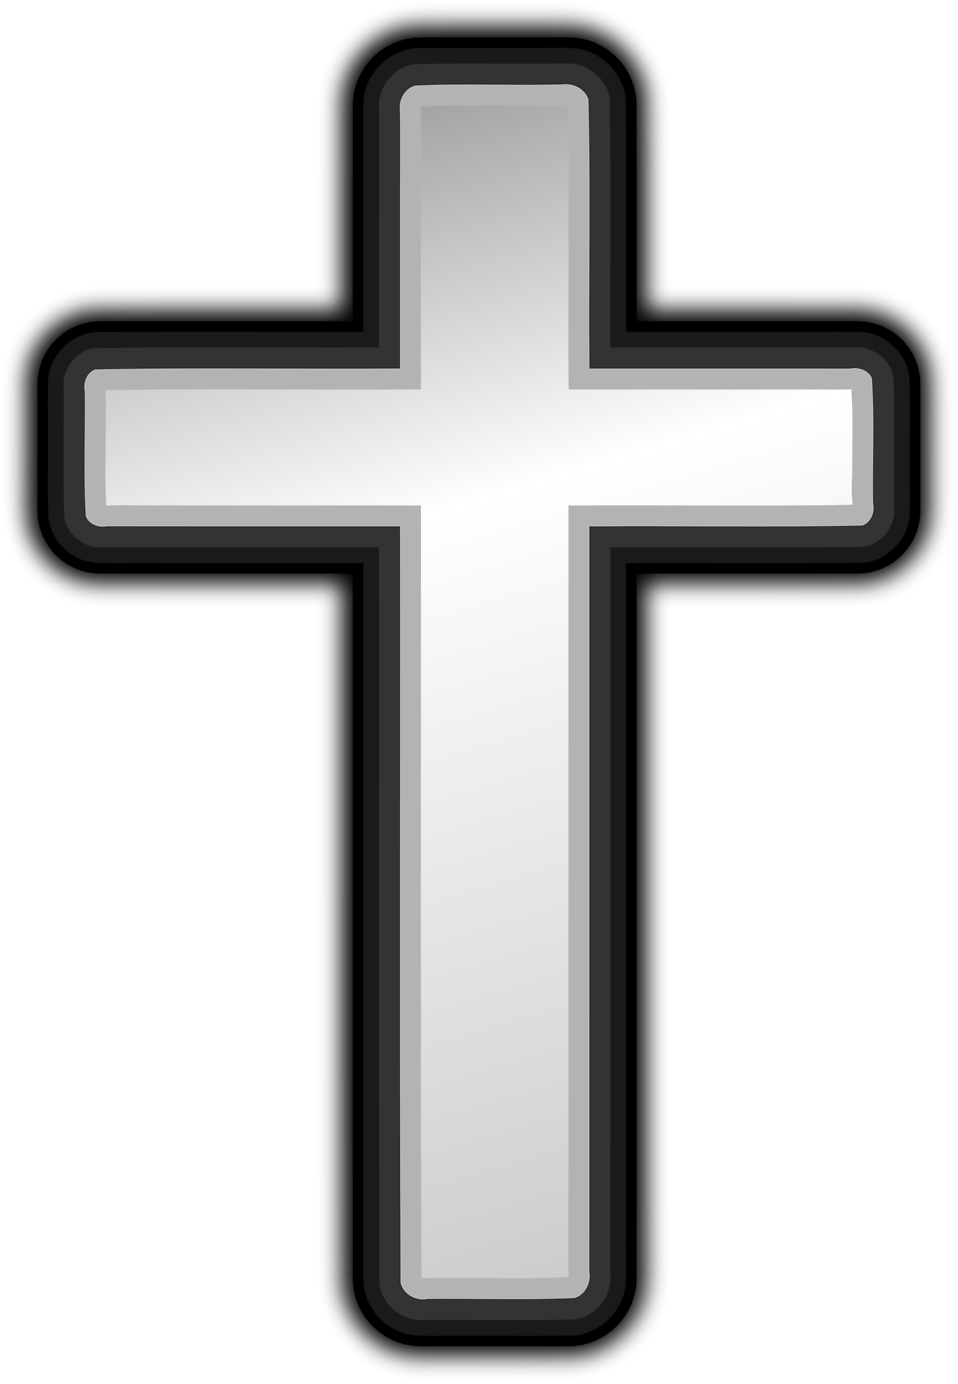 Cross   Free Stock Photo   Illustration Of A White Cross     16542